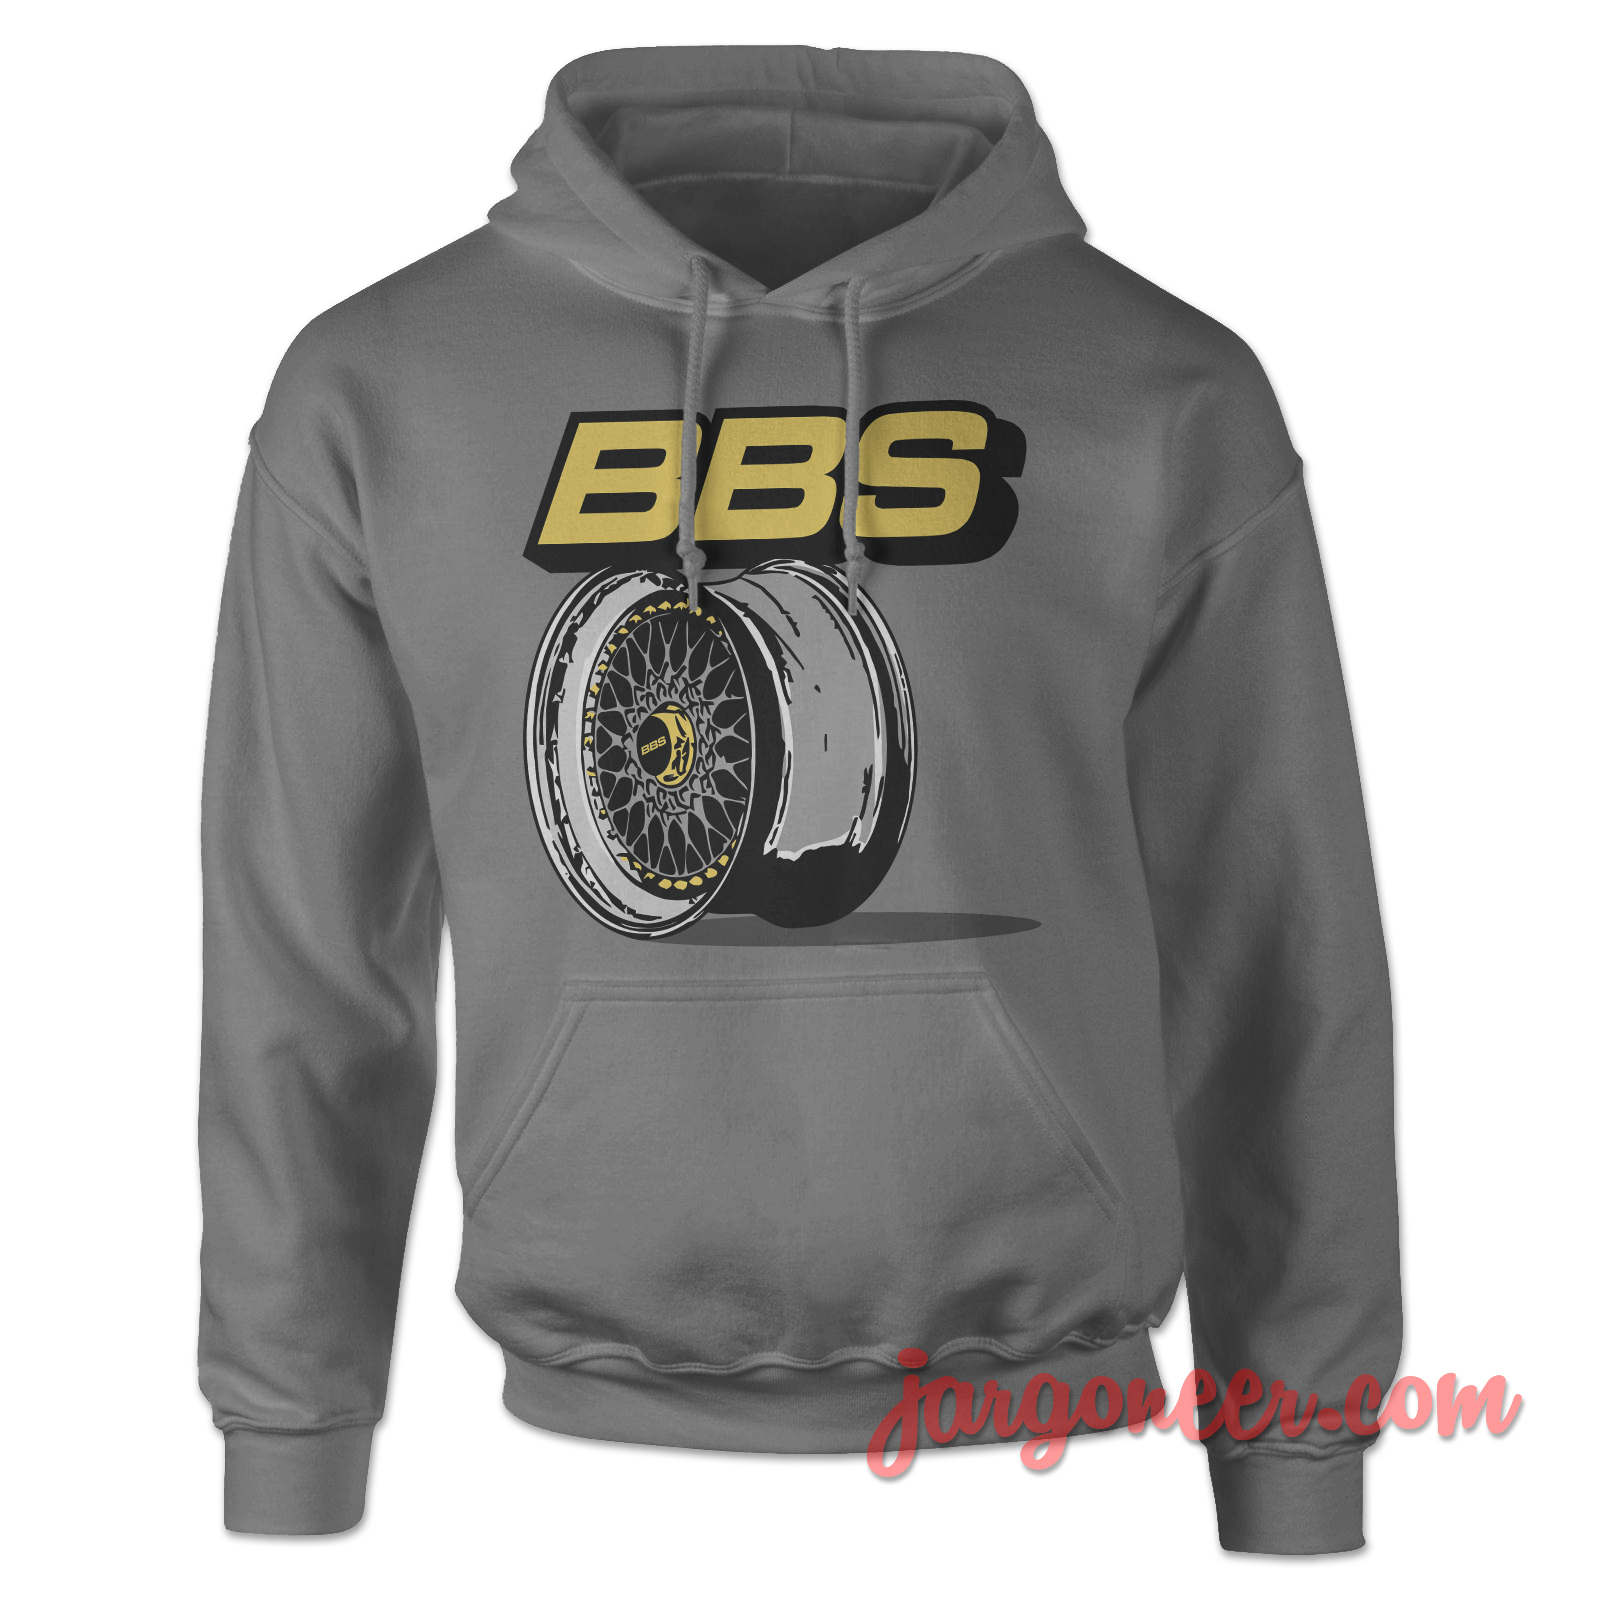 BBS Wheel Art Gray Hoody - Shop Unique Graphic Cool Shirt Designs